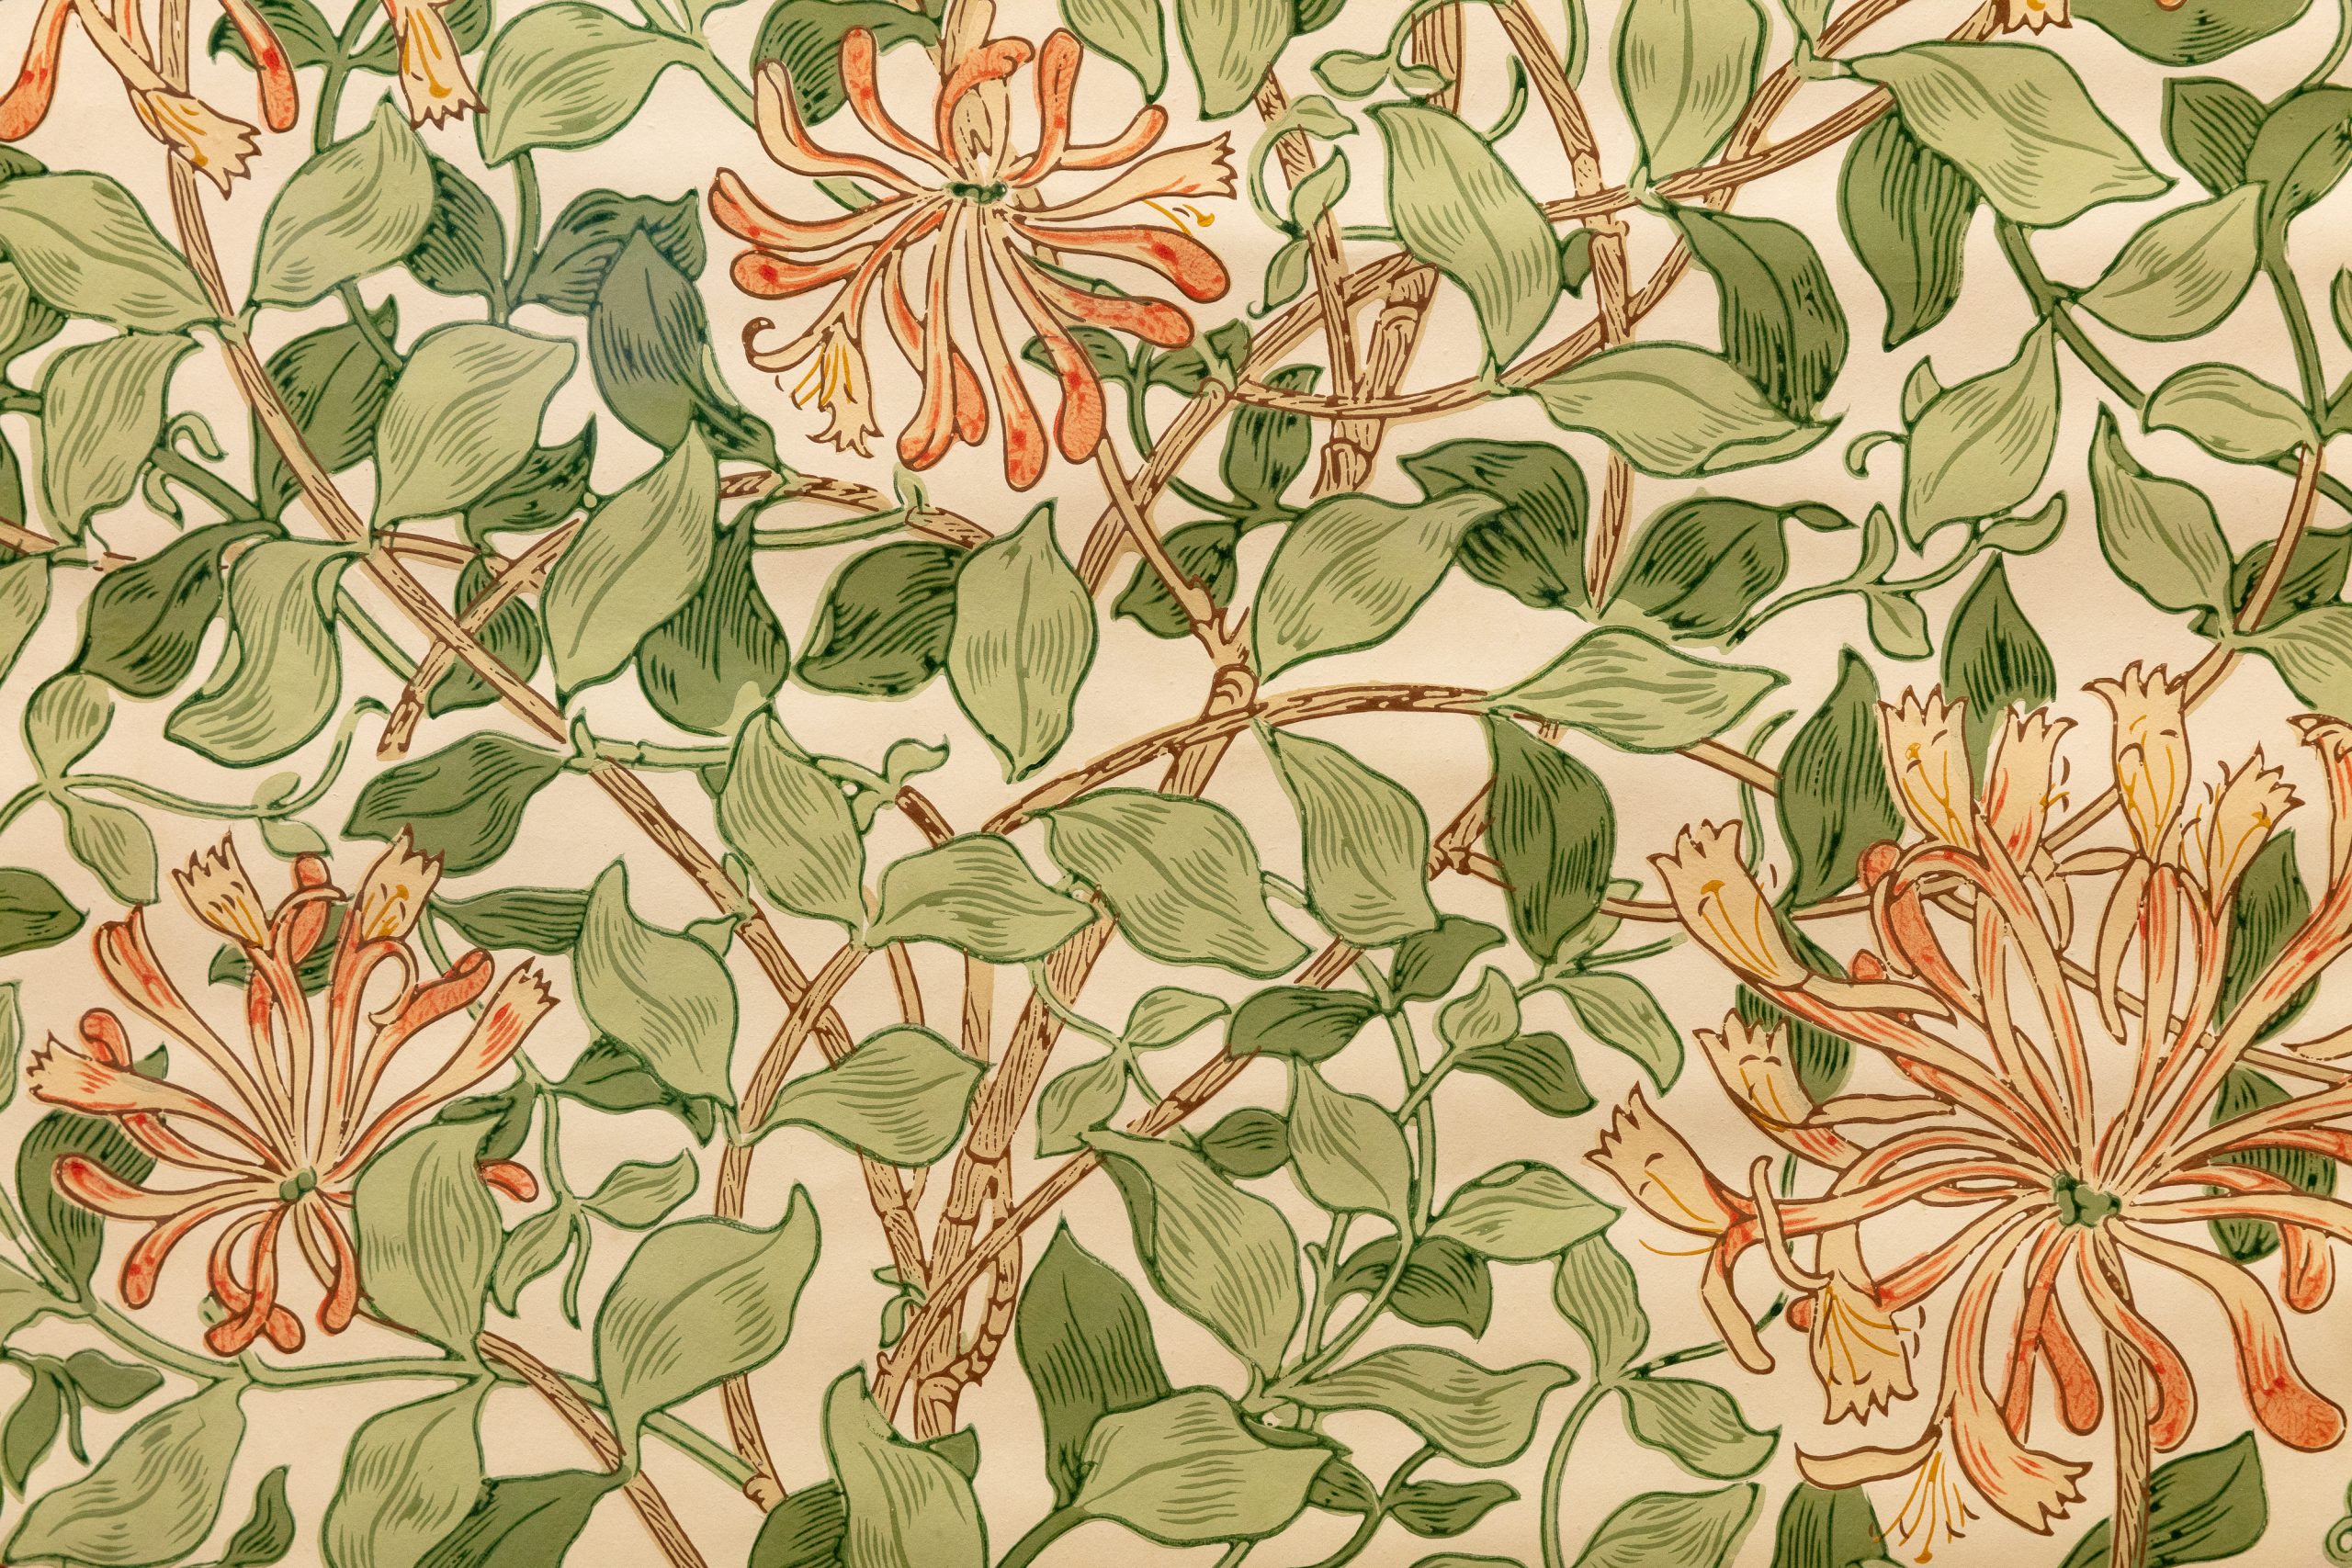 William Morris floral wallpaper design in greens, yellows, orange and cream